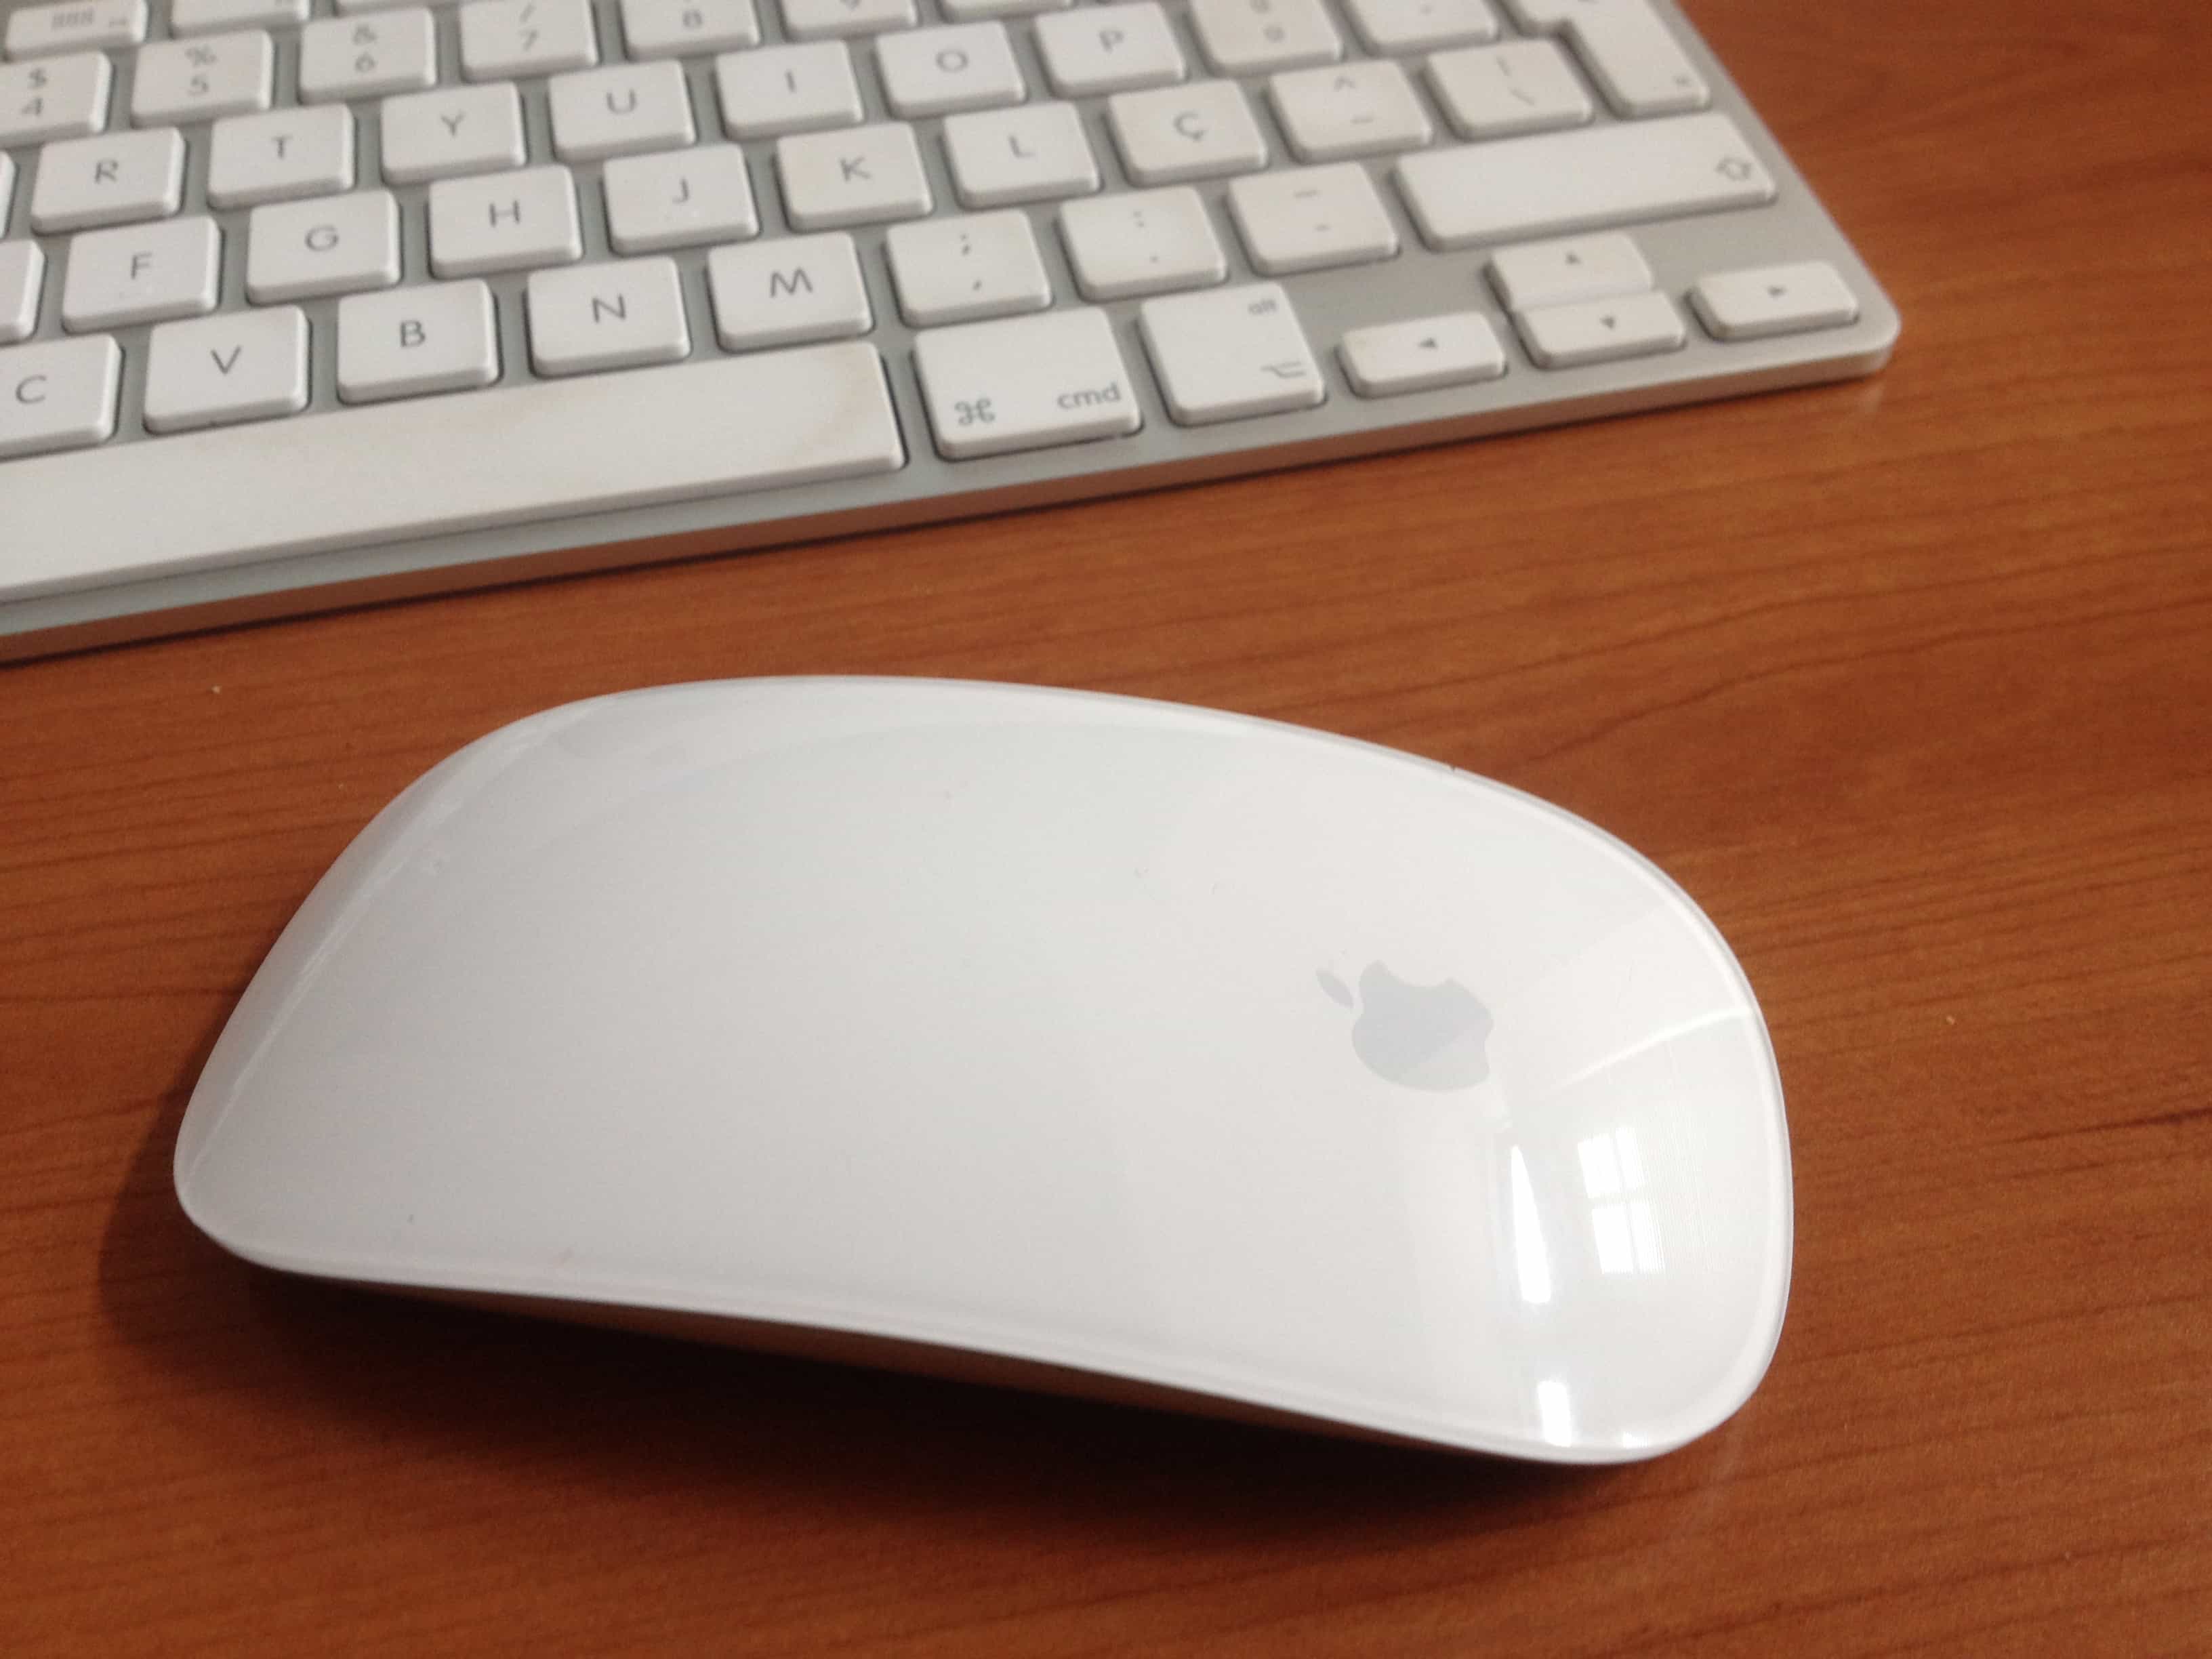 mouses para o Mac